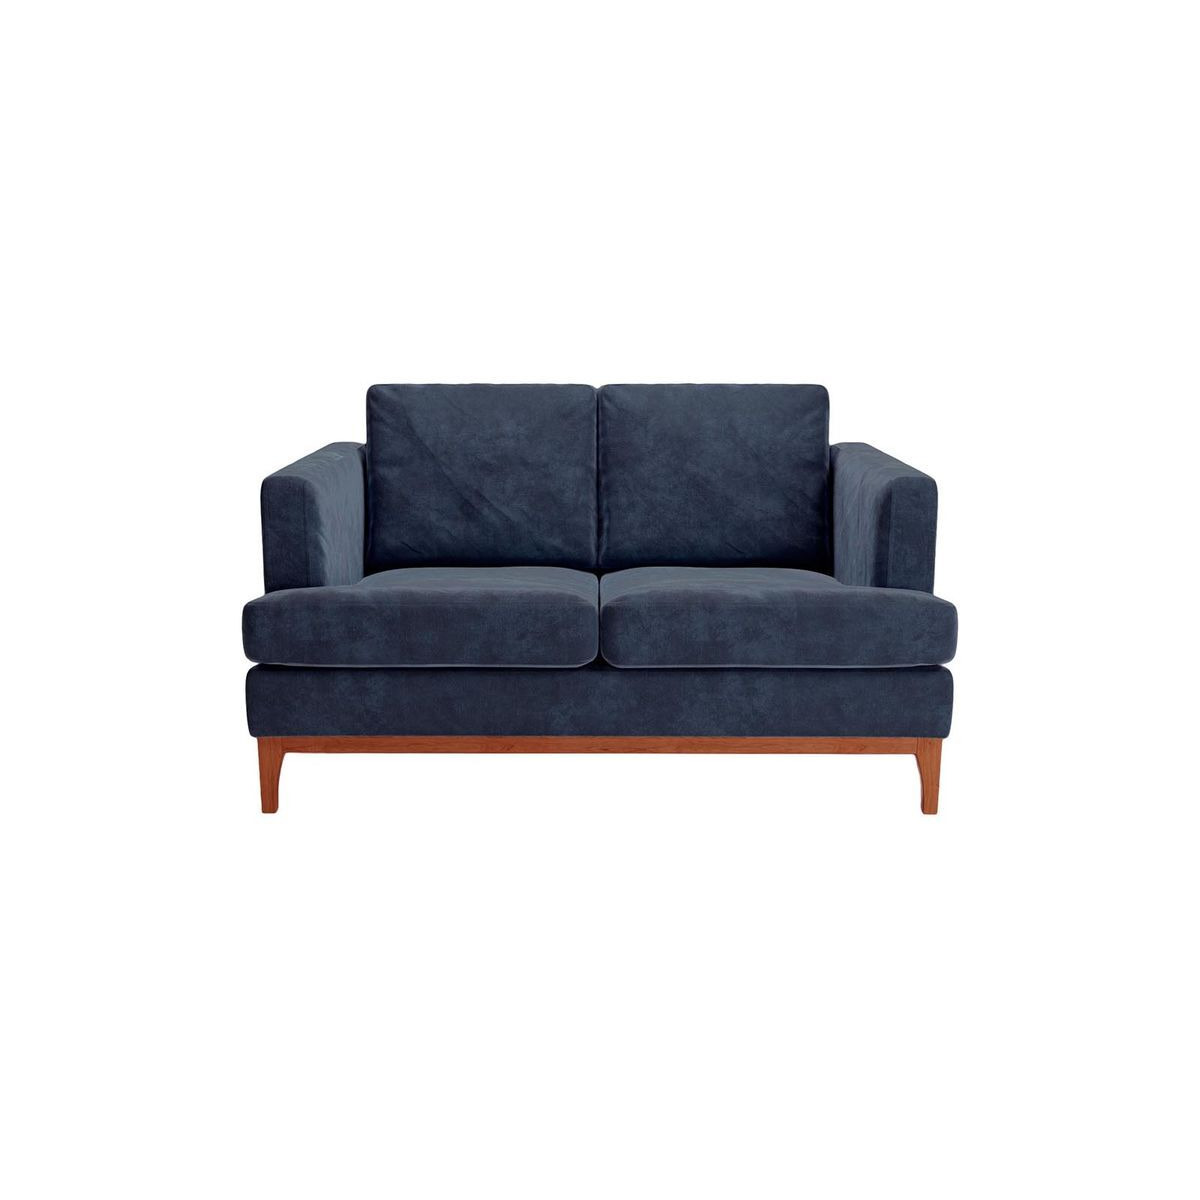 Scarlett Eco 2 Seater Sofa, navy blue, Leg colour: aveo - image 1